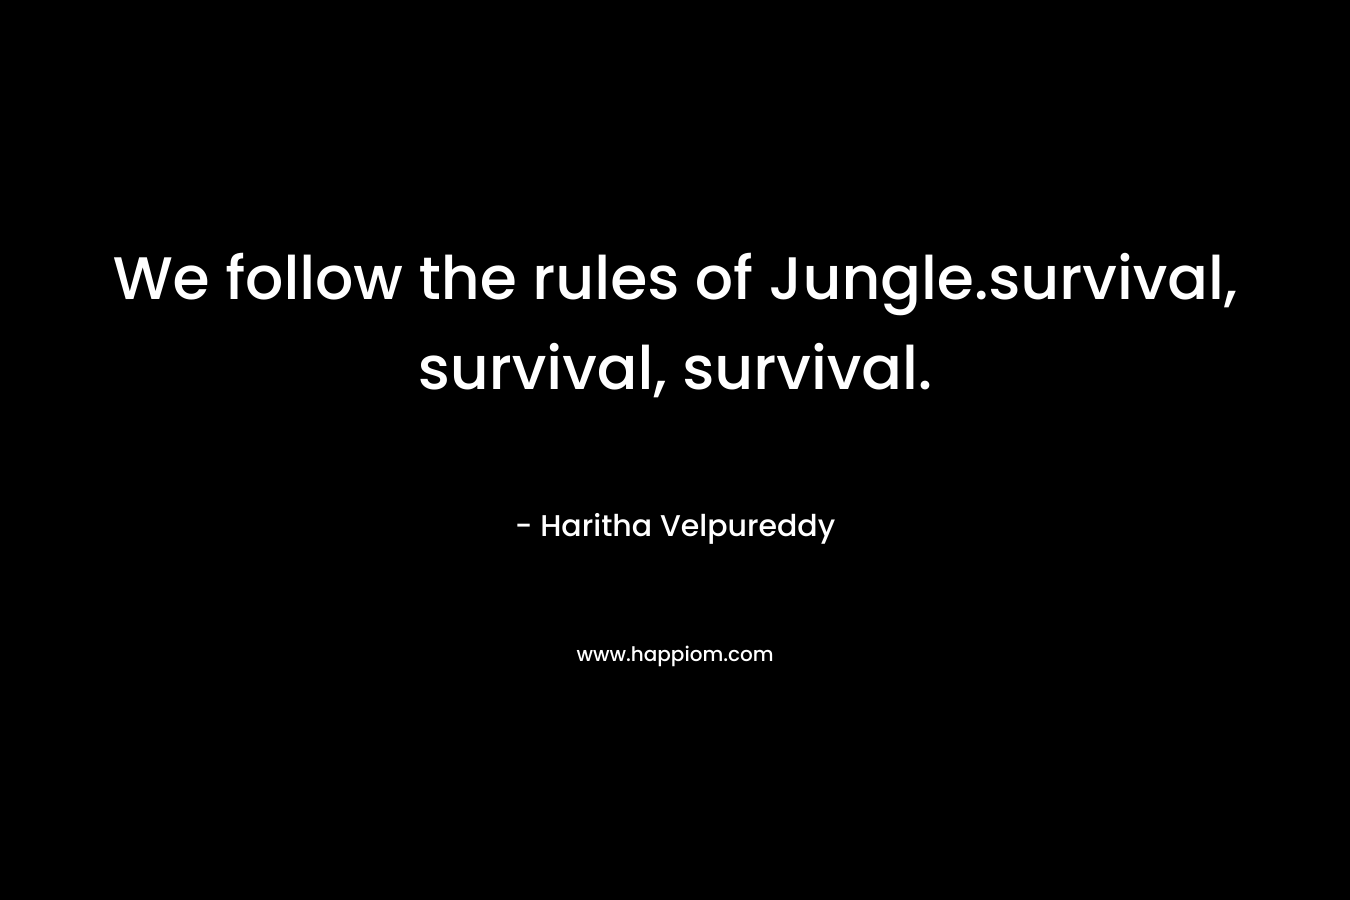 We follow the rules of Jungle.survival, survival, survival.